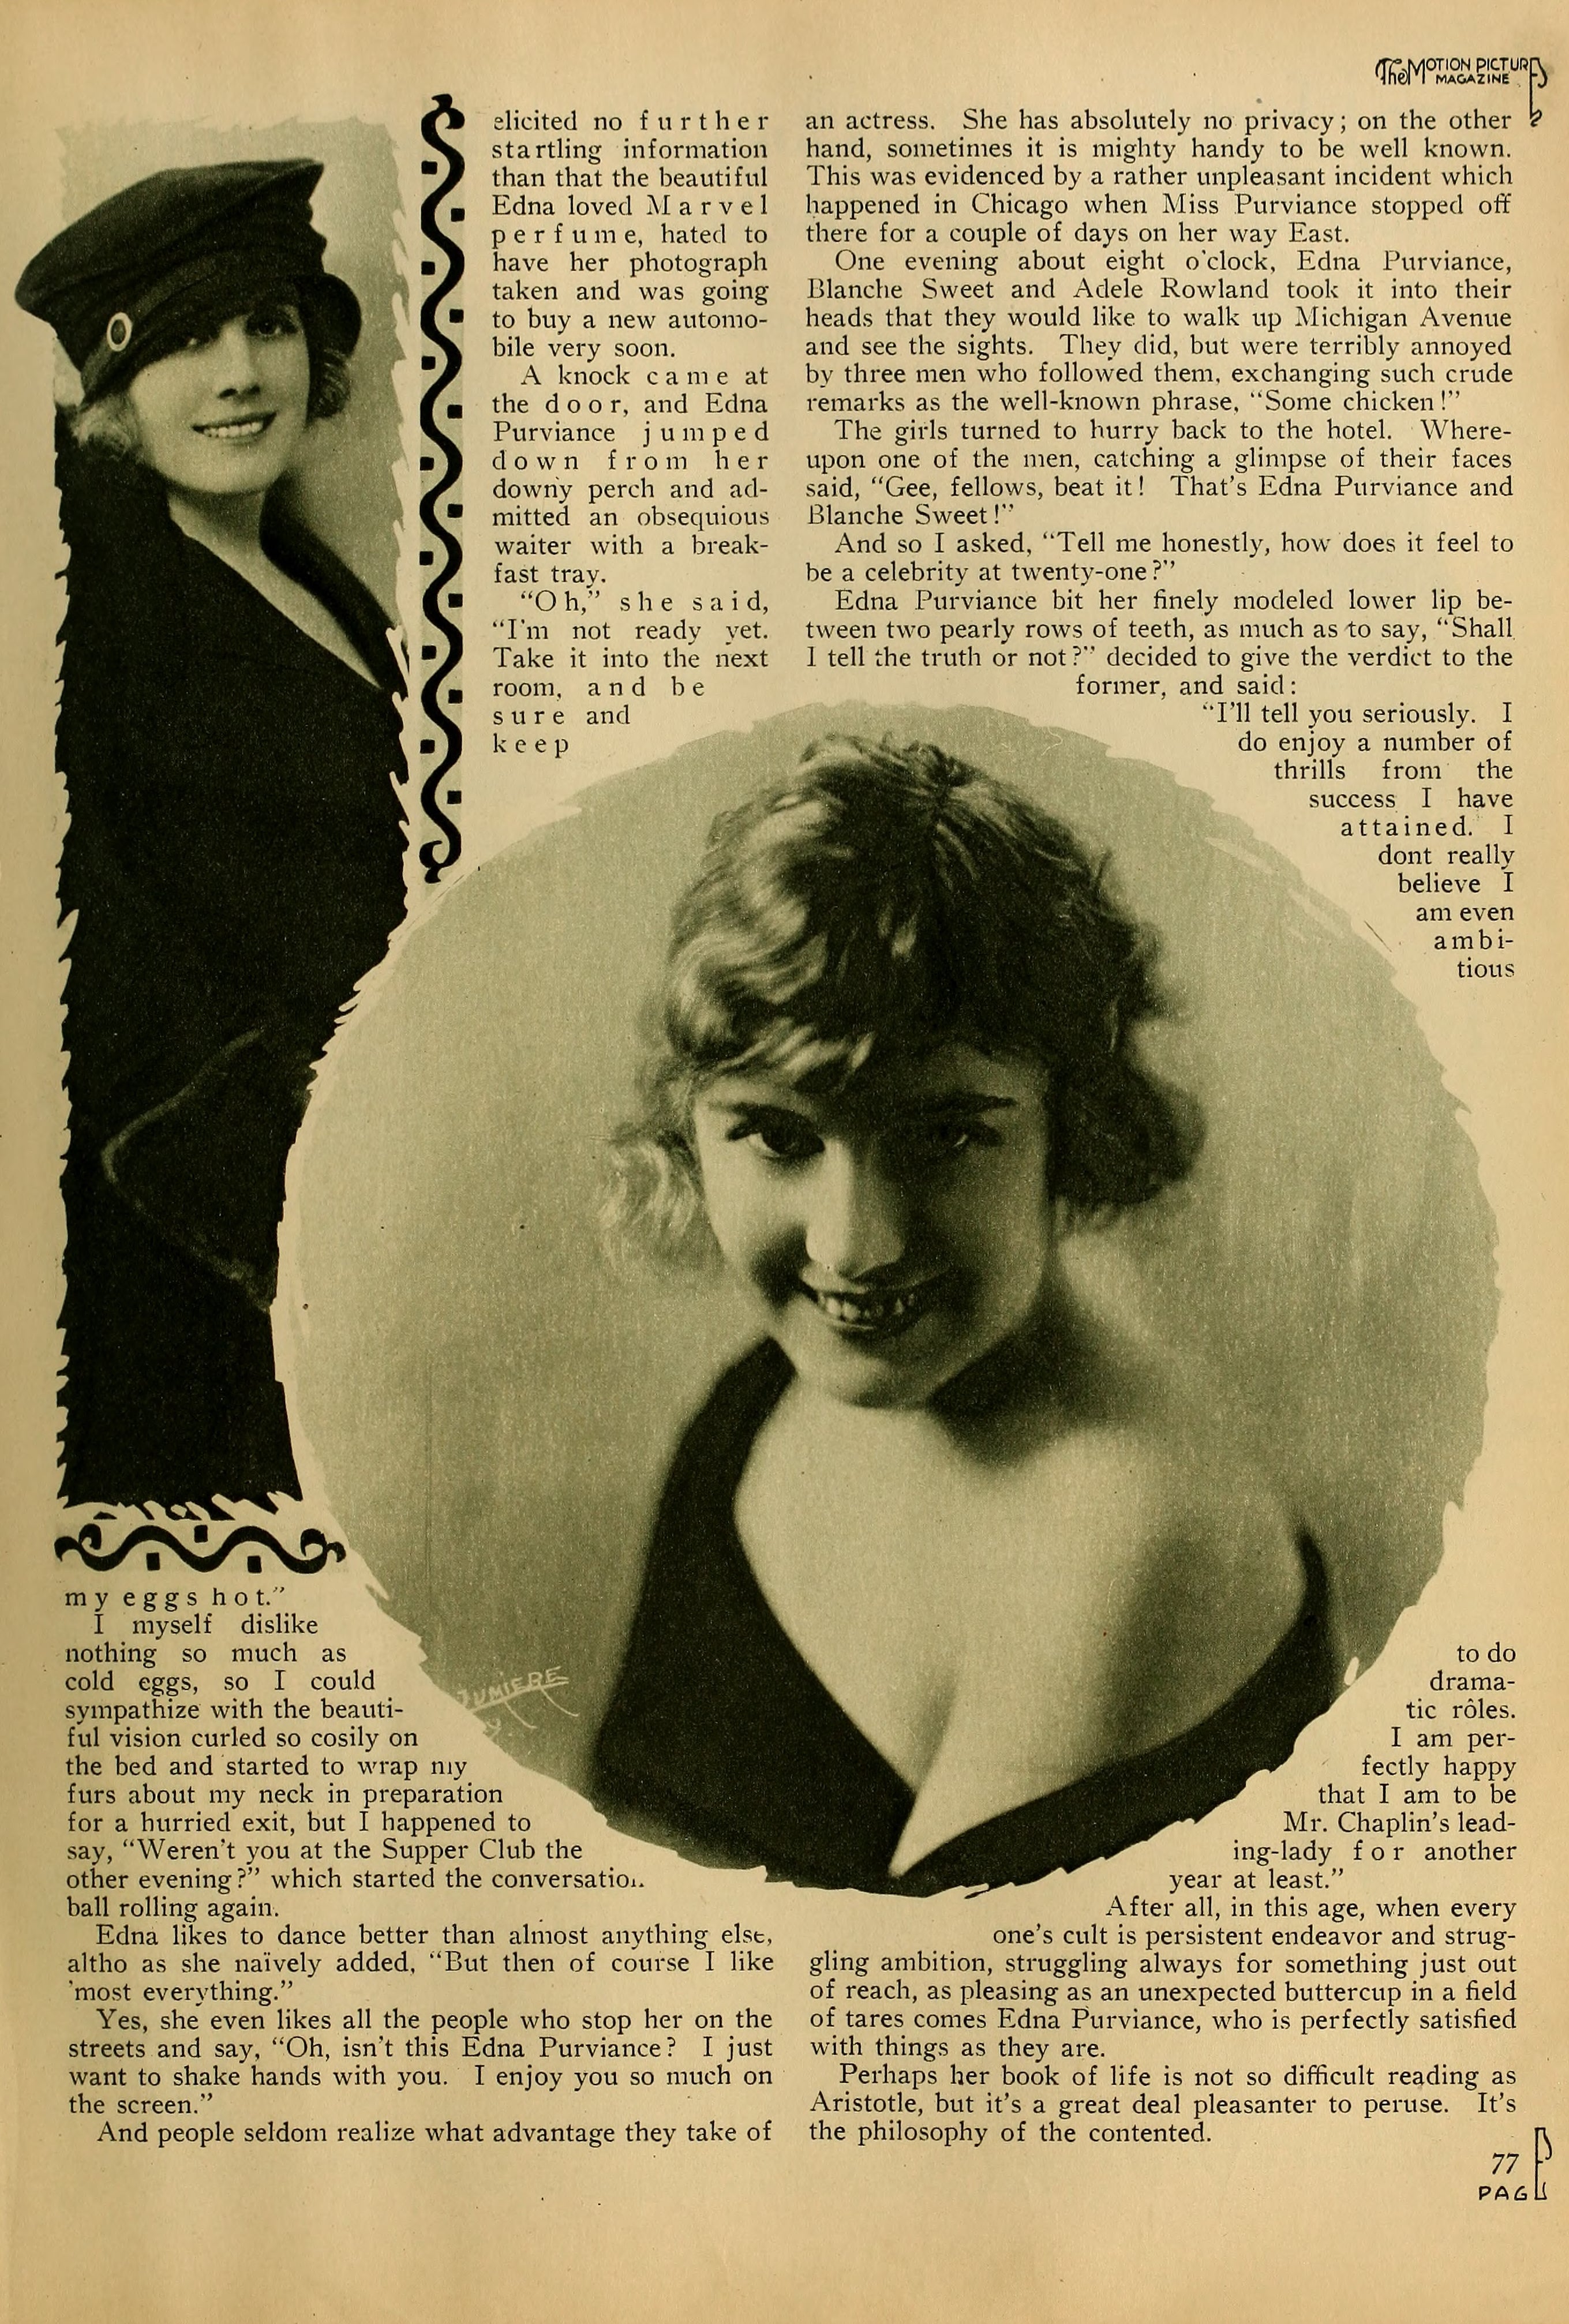 Edna Purviance — Little Miss Happiness (1918) | www.vintoz.com